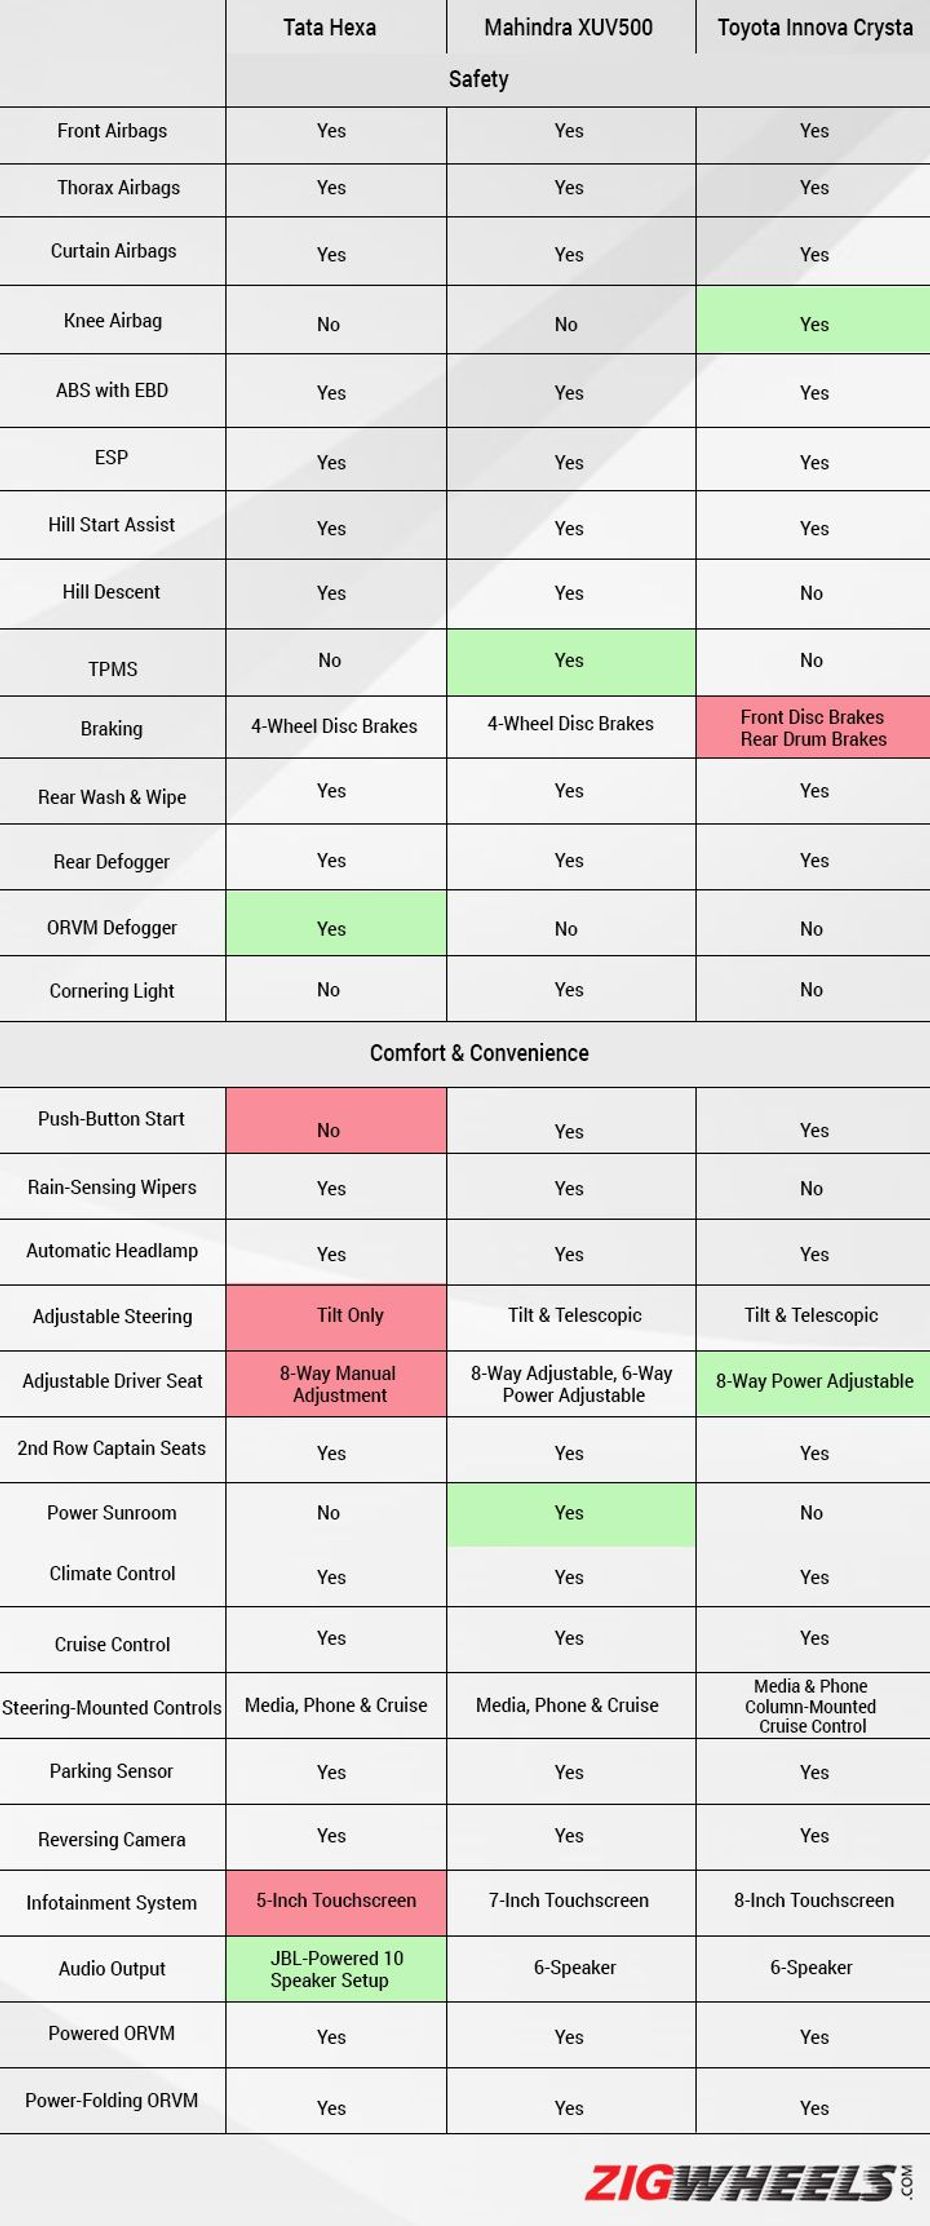 Tata Hexa feature comparison